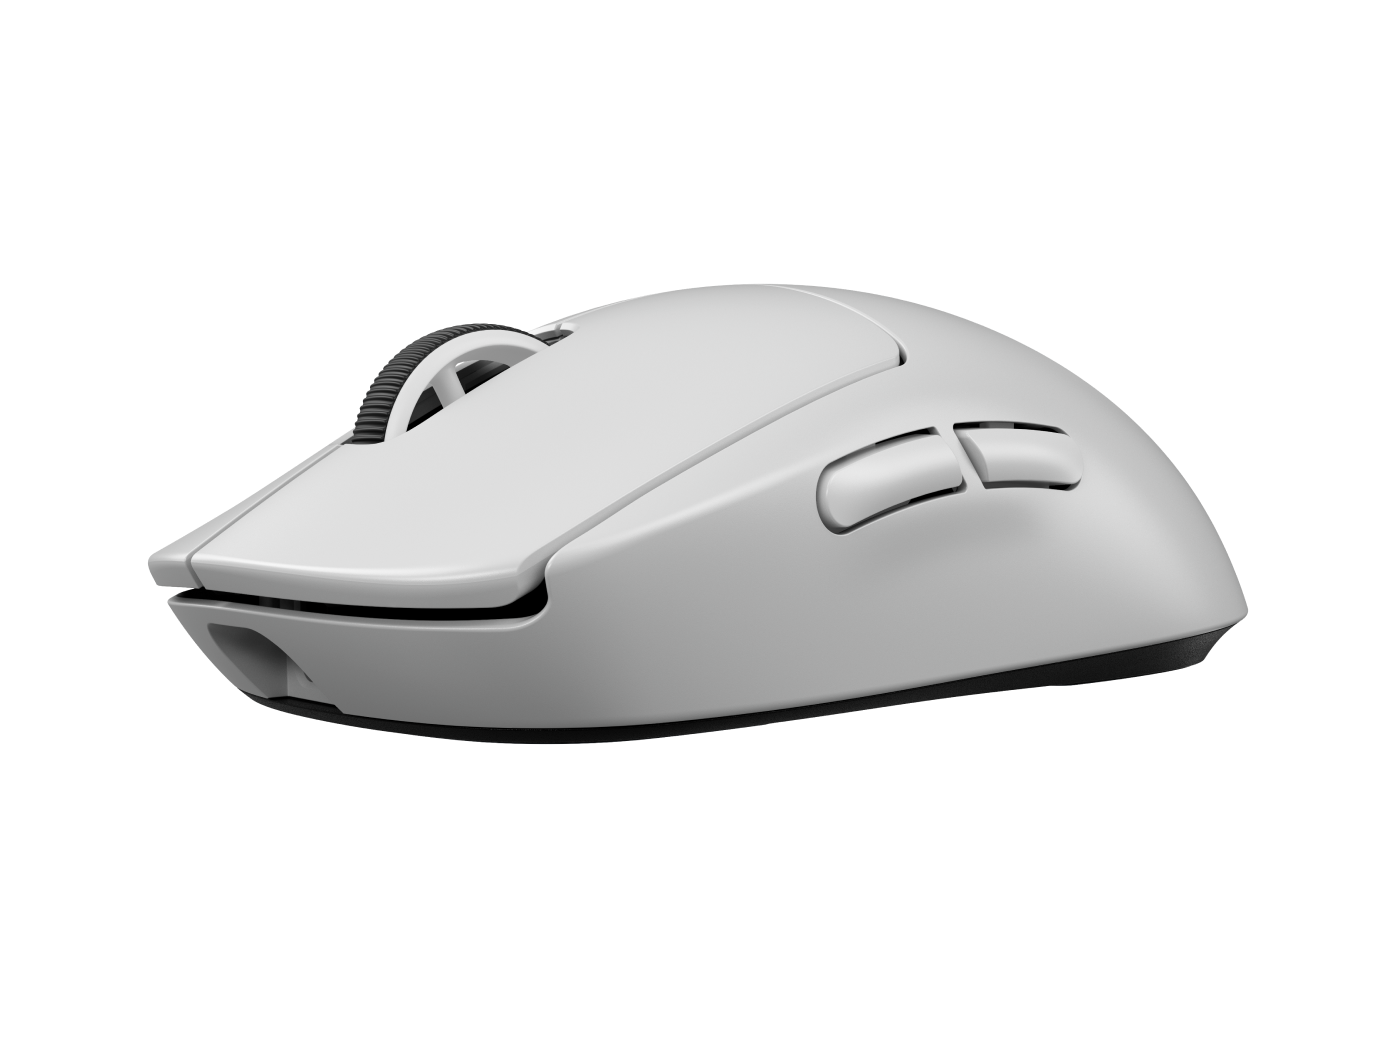 PRO X SUPERLIGHT 2 LIGHTSPEED Wireless Gaming Mouse